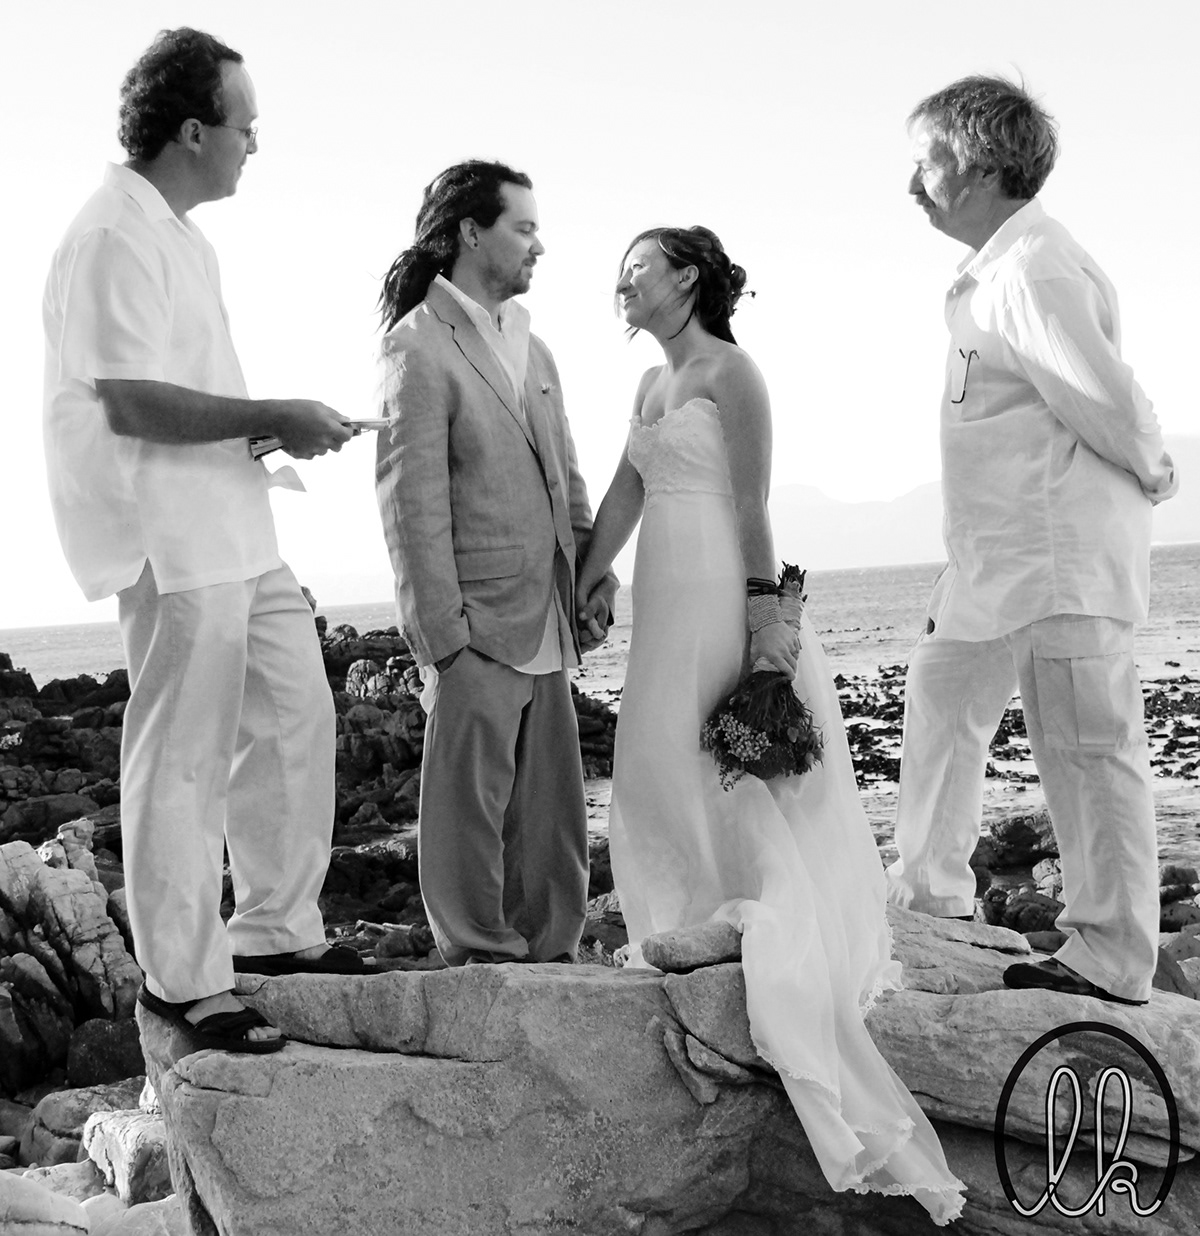 wedding couples beach south africa marriage photo happy Love portrait Whale family dress Dreadlocks Nature Ocean